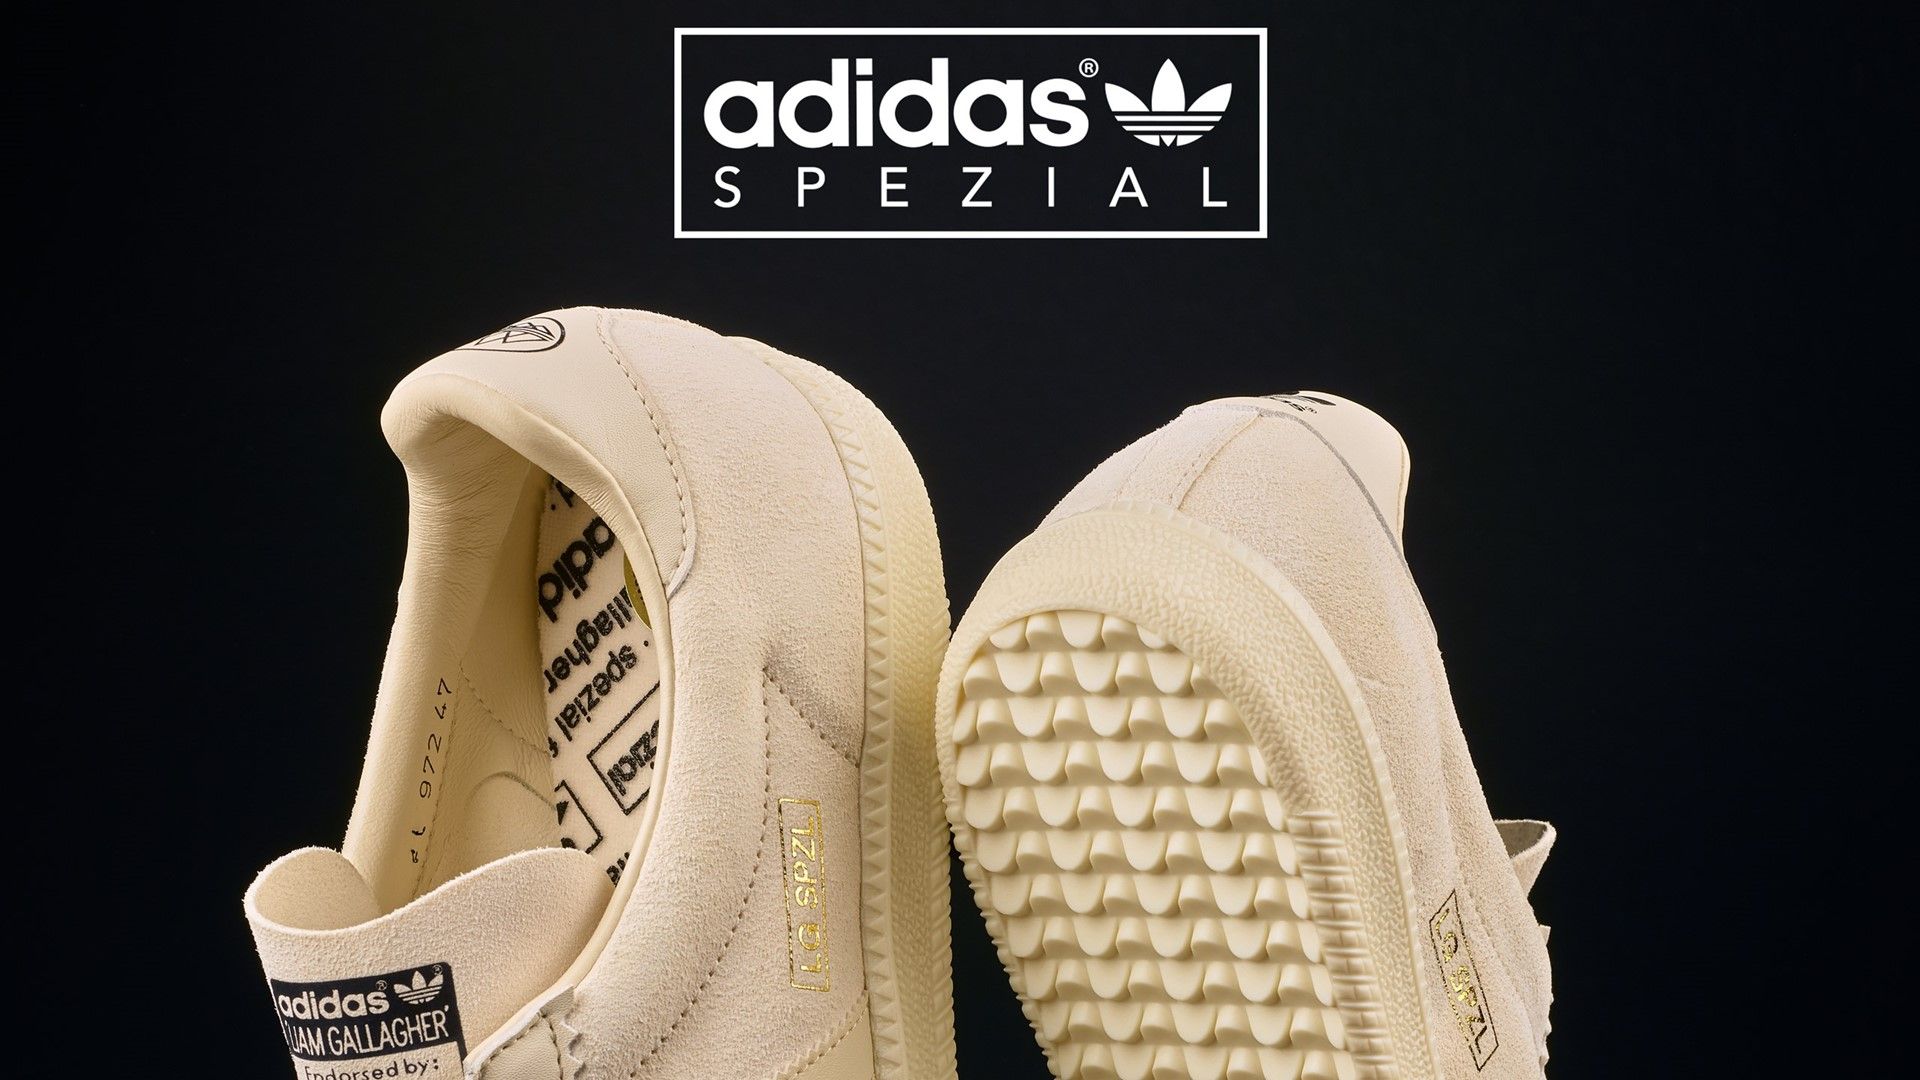 adidas SPEZIAL unveils the LG SPZL